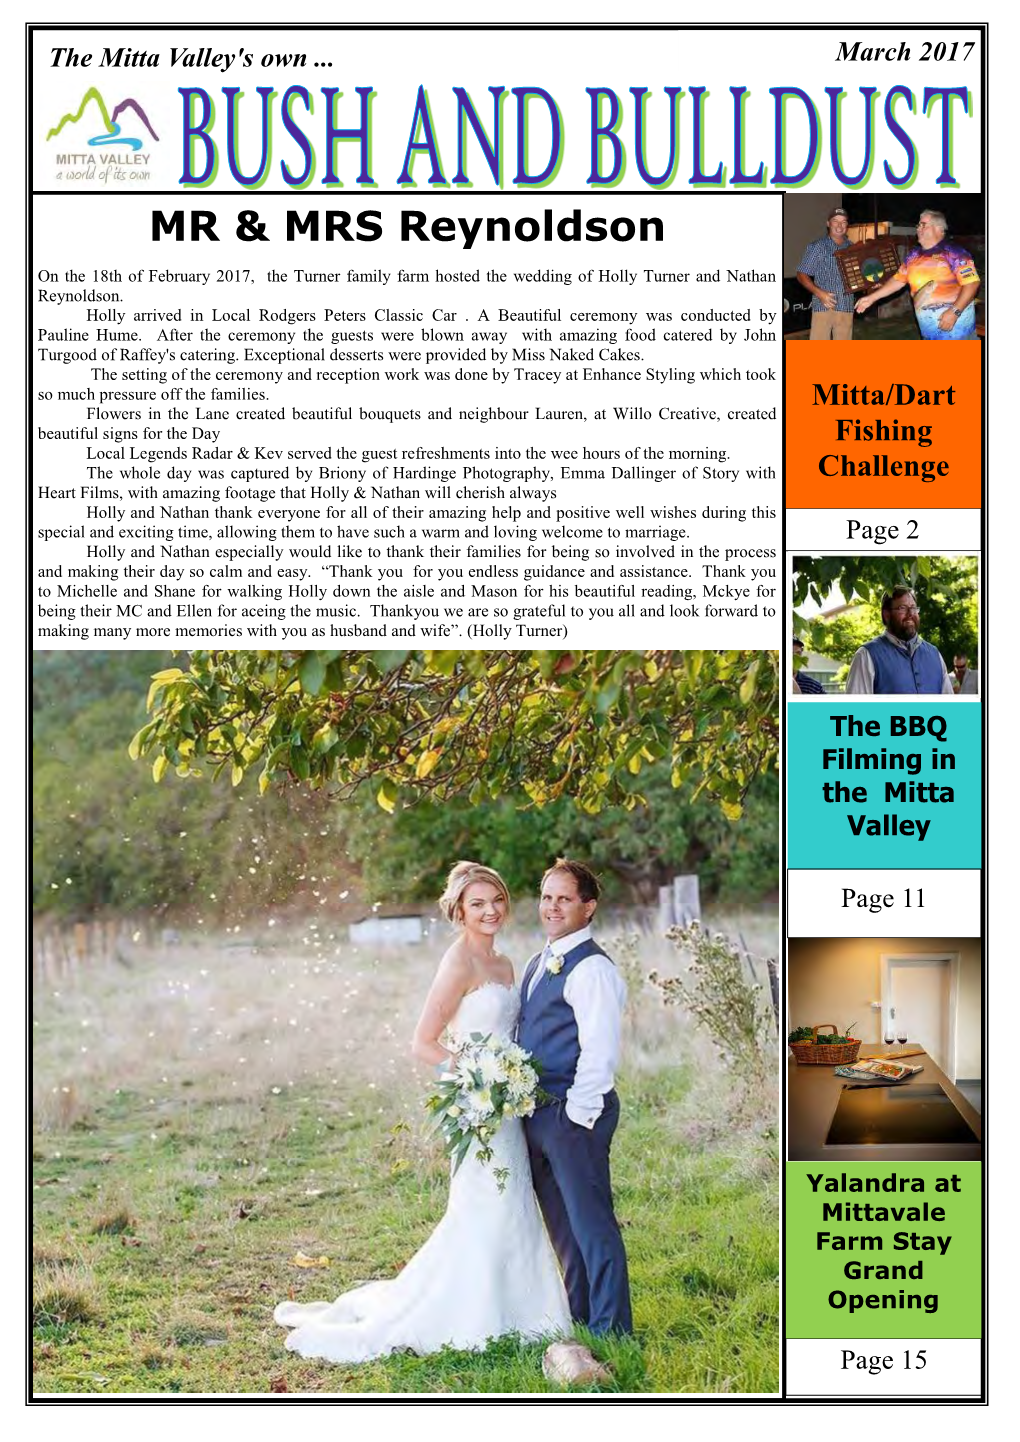 MR & MRS Reynoldson